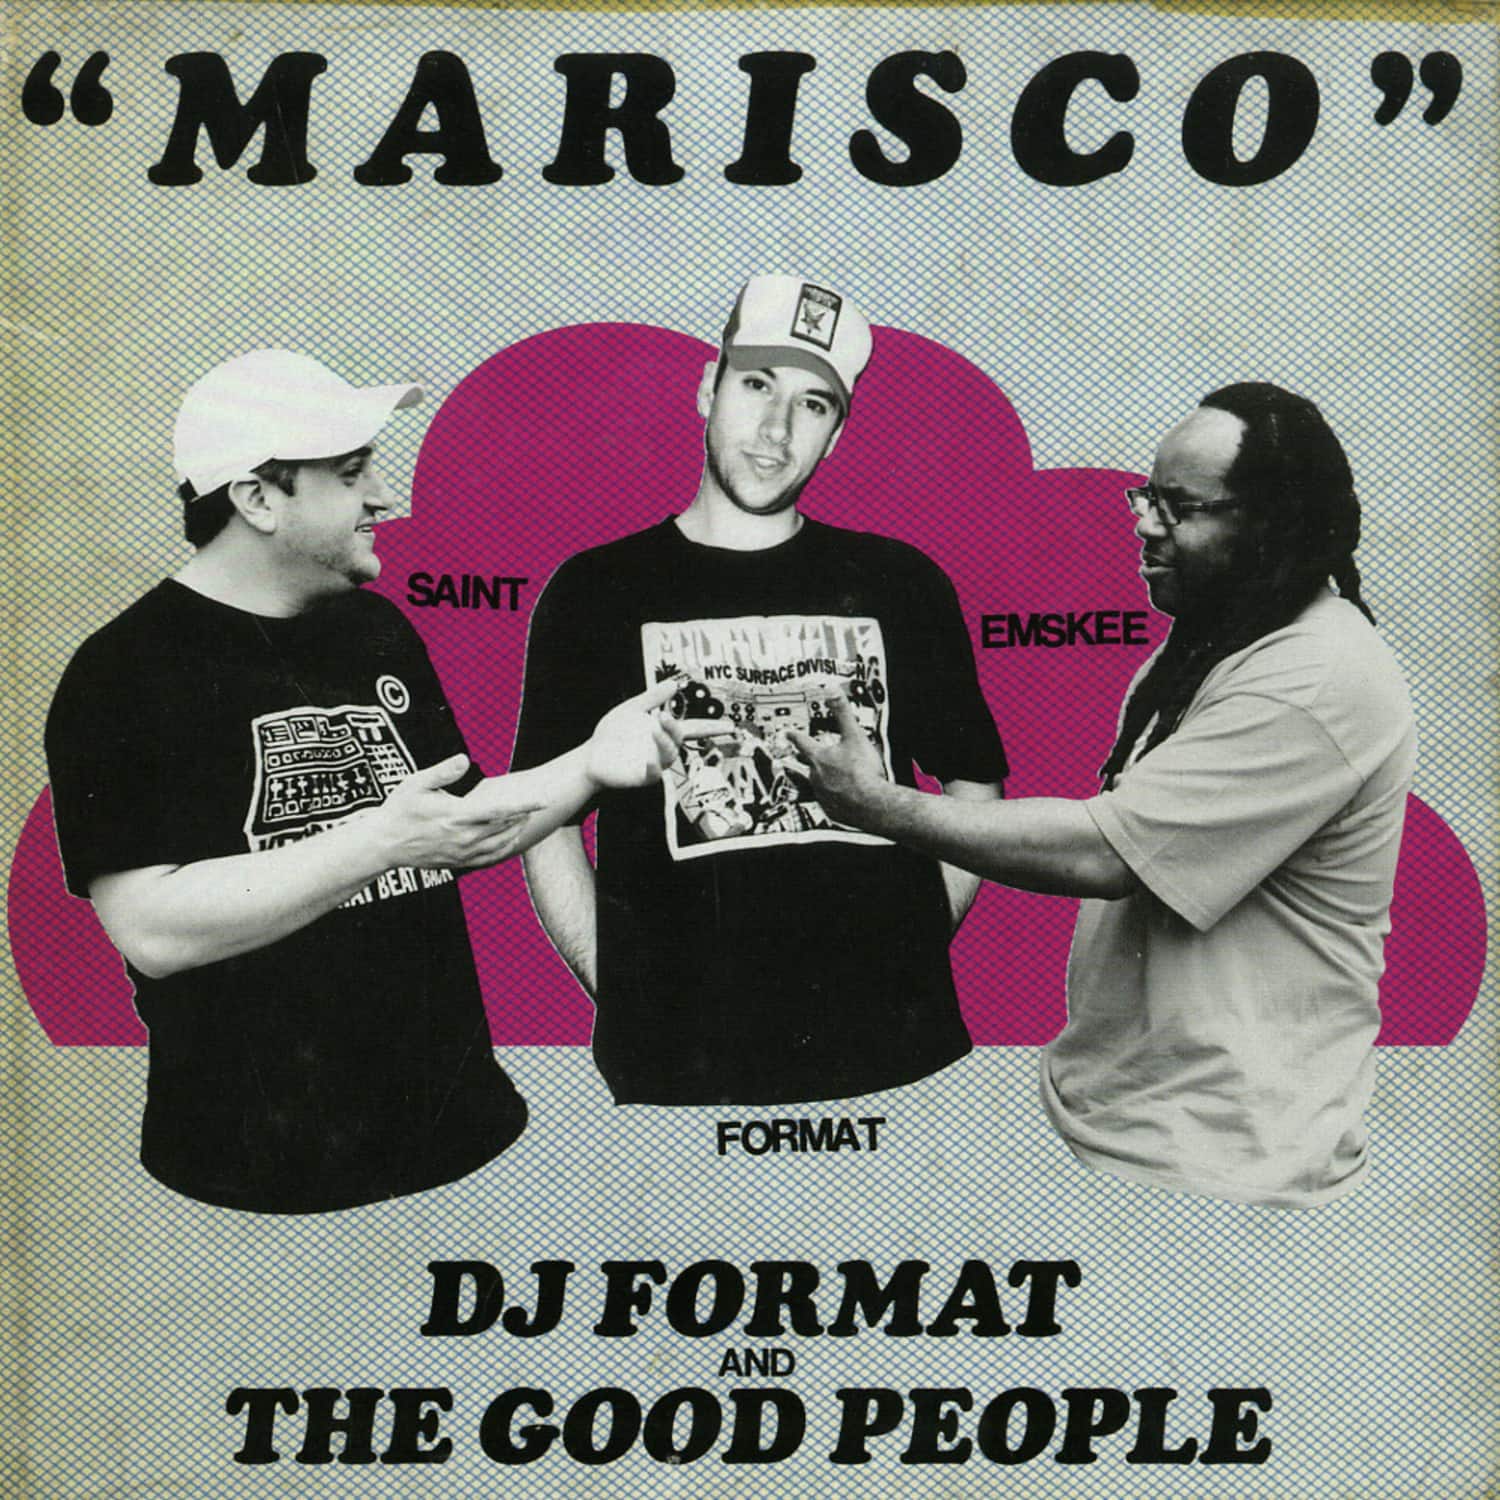 DJ Format & The Good People - MARISCO 